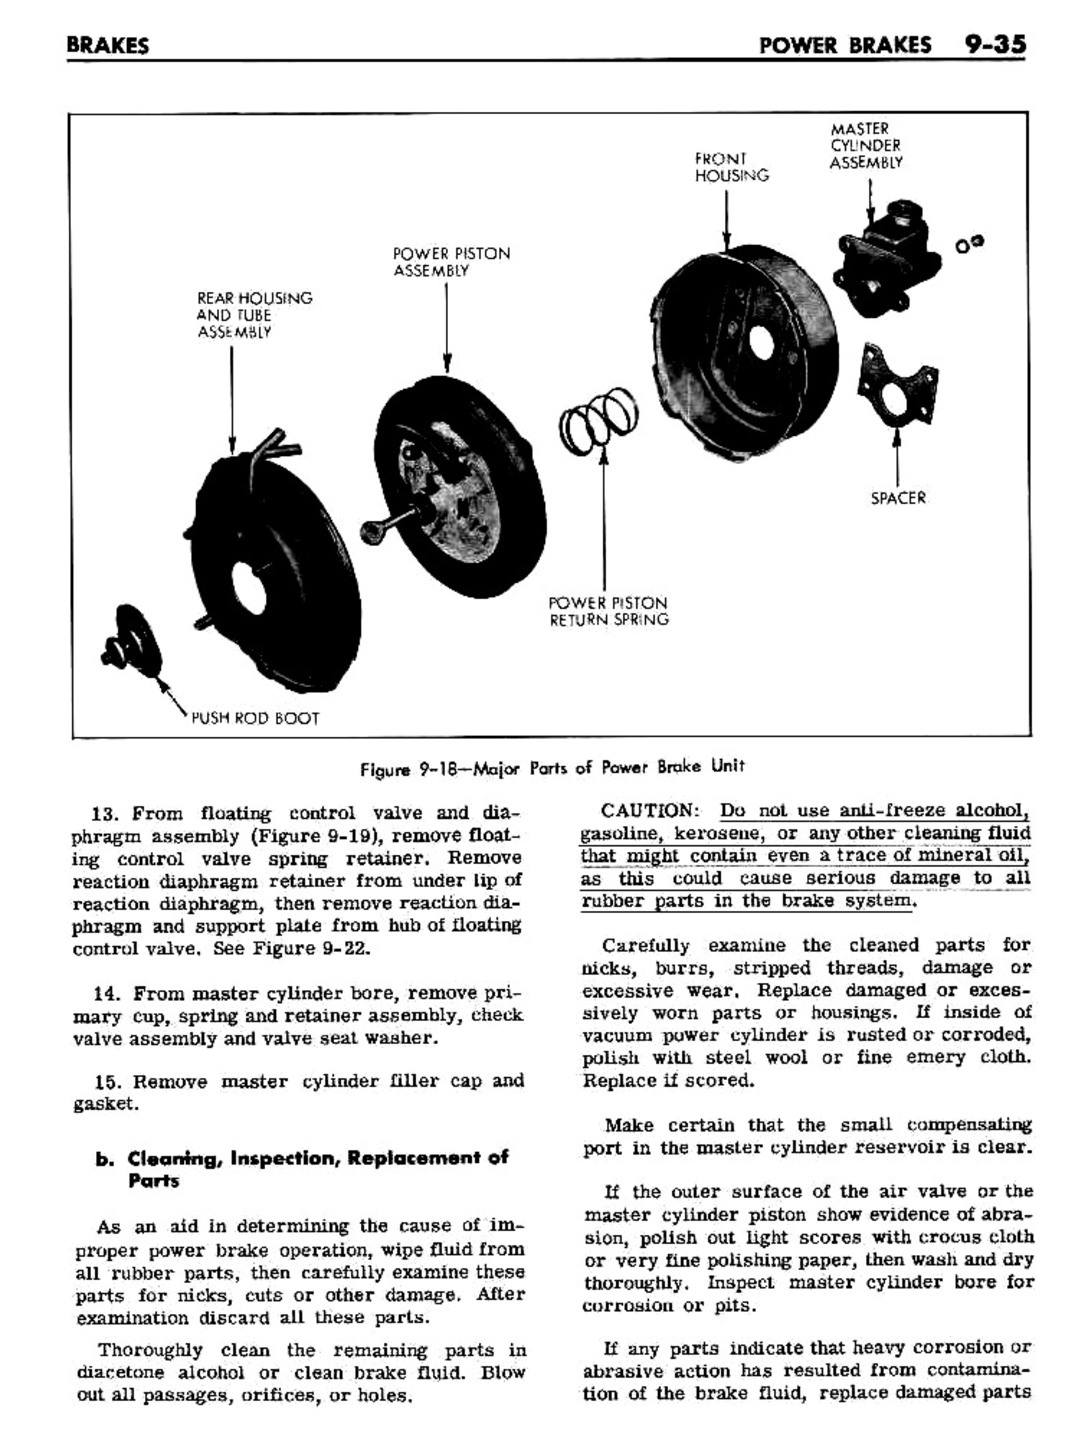 n_09 1961 Buick Shop Manual - Brakes-035-035.jpg